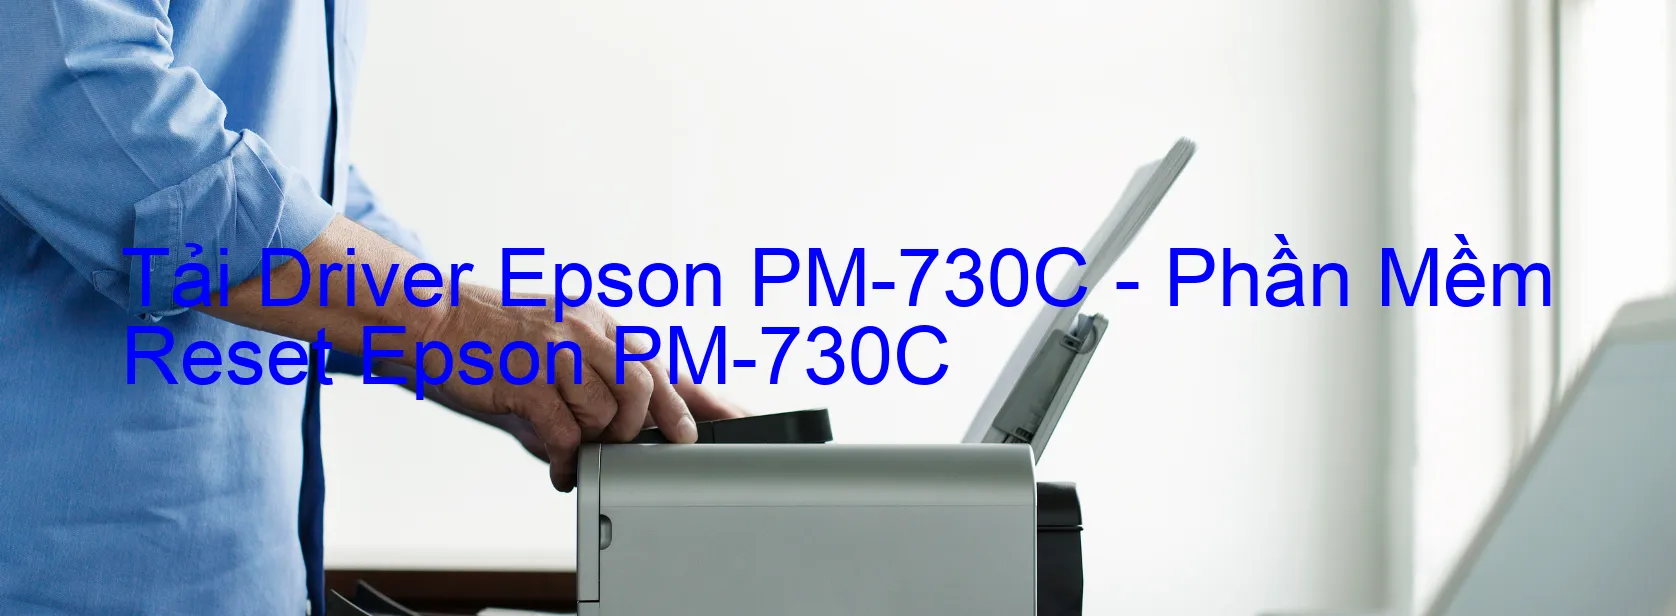 Driver Epson PM-730C, Phần Mềm Reset Epson PM-730C